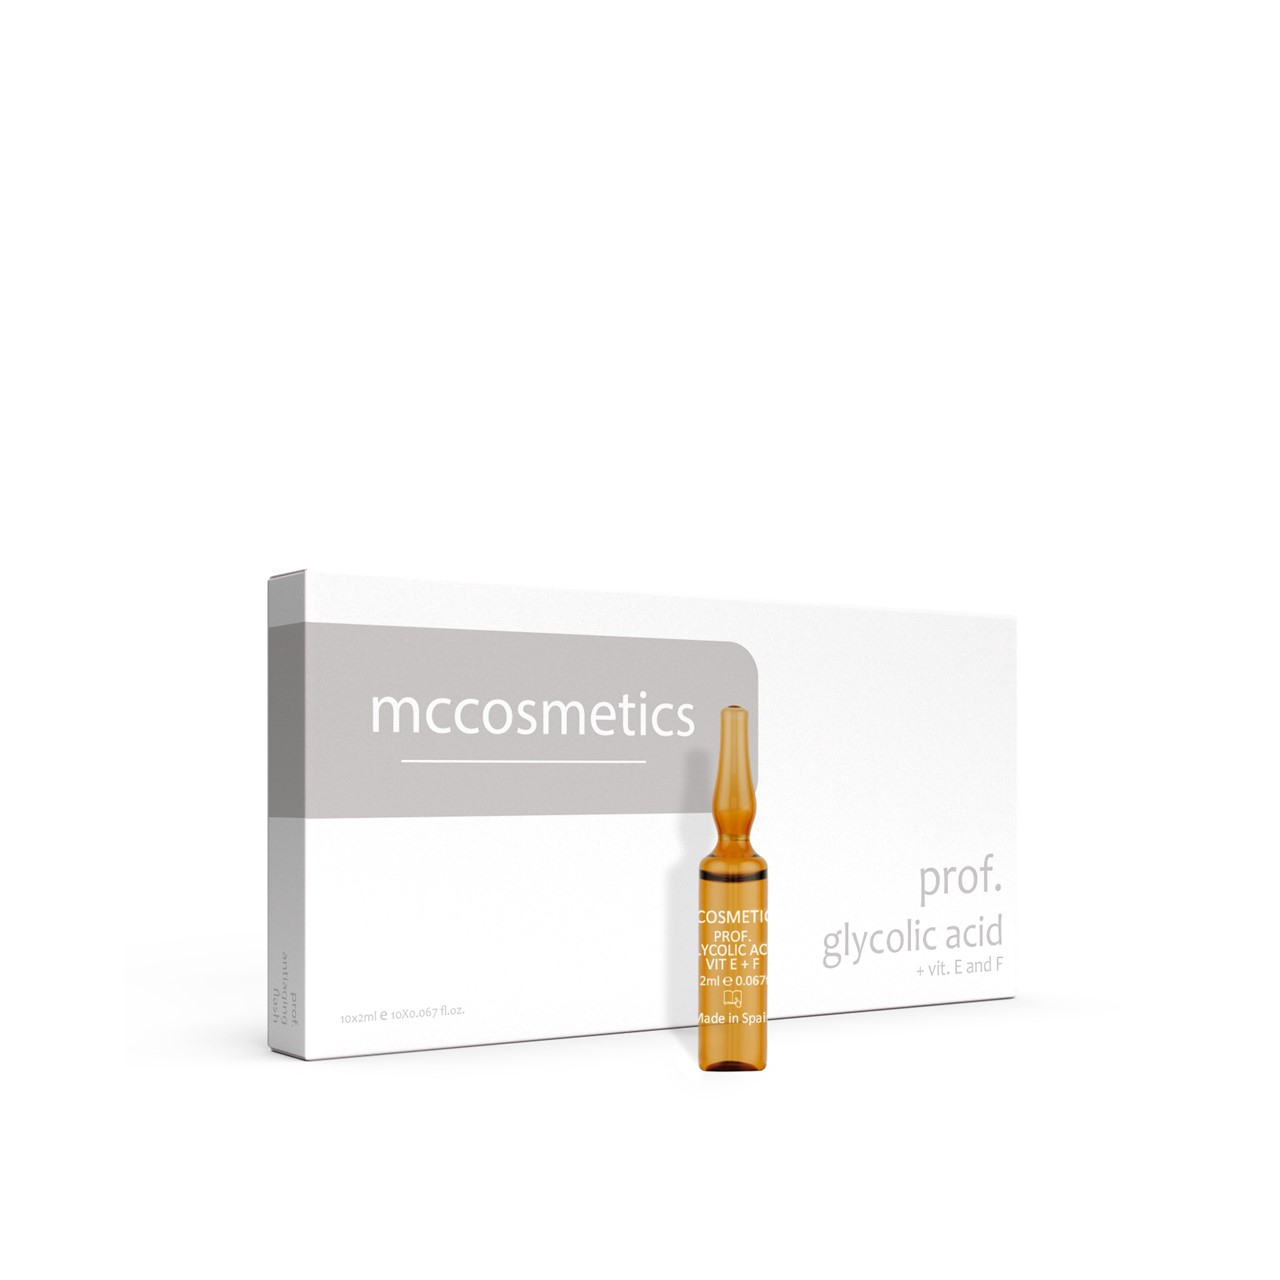 mccosmetics Prof. Glycolic Acid + Vit. E and F Ampoules 10x2ml